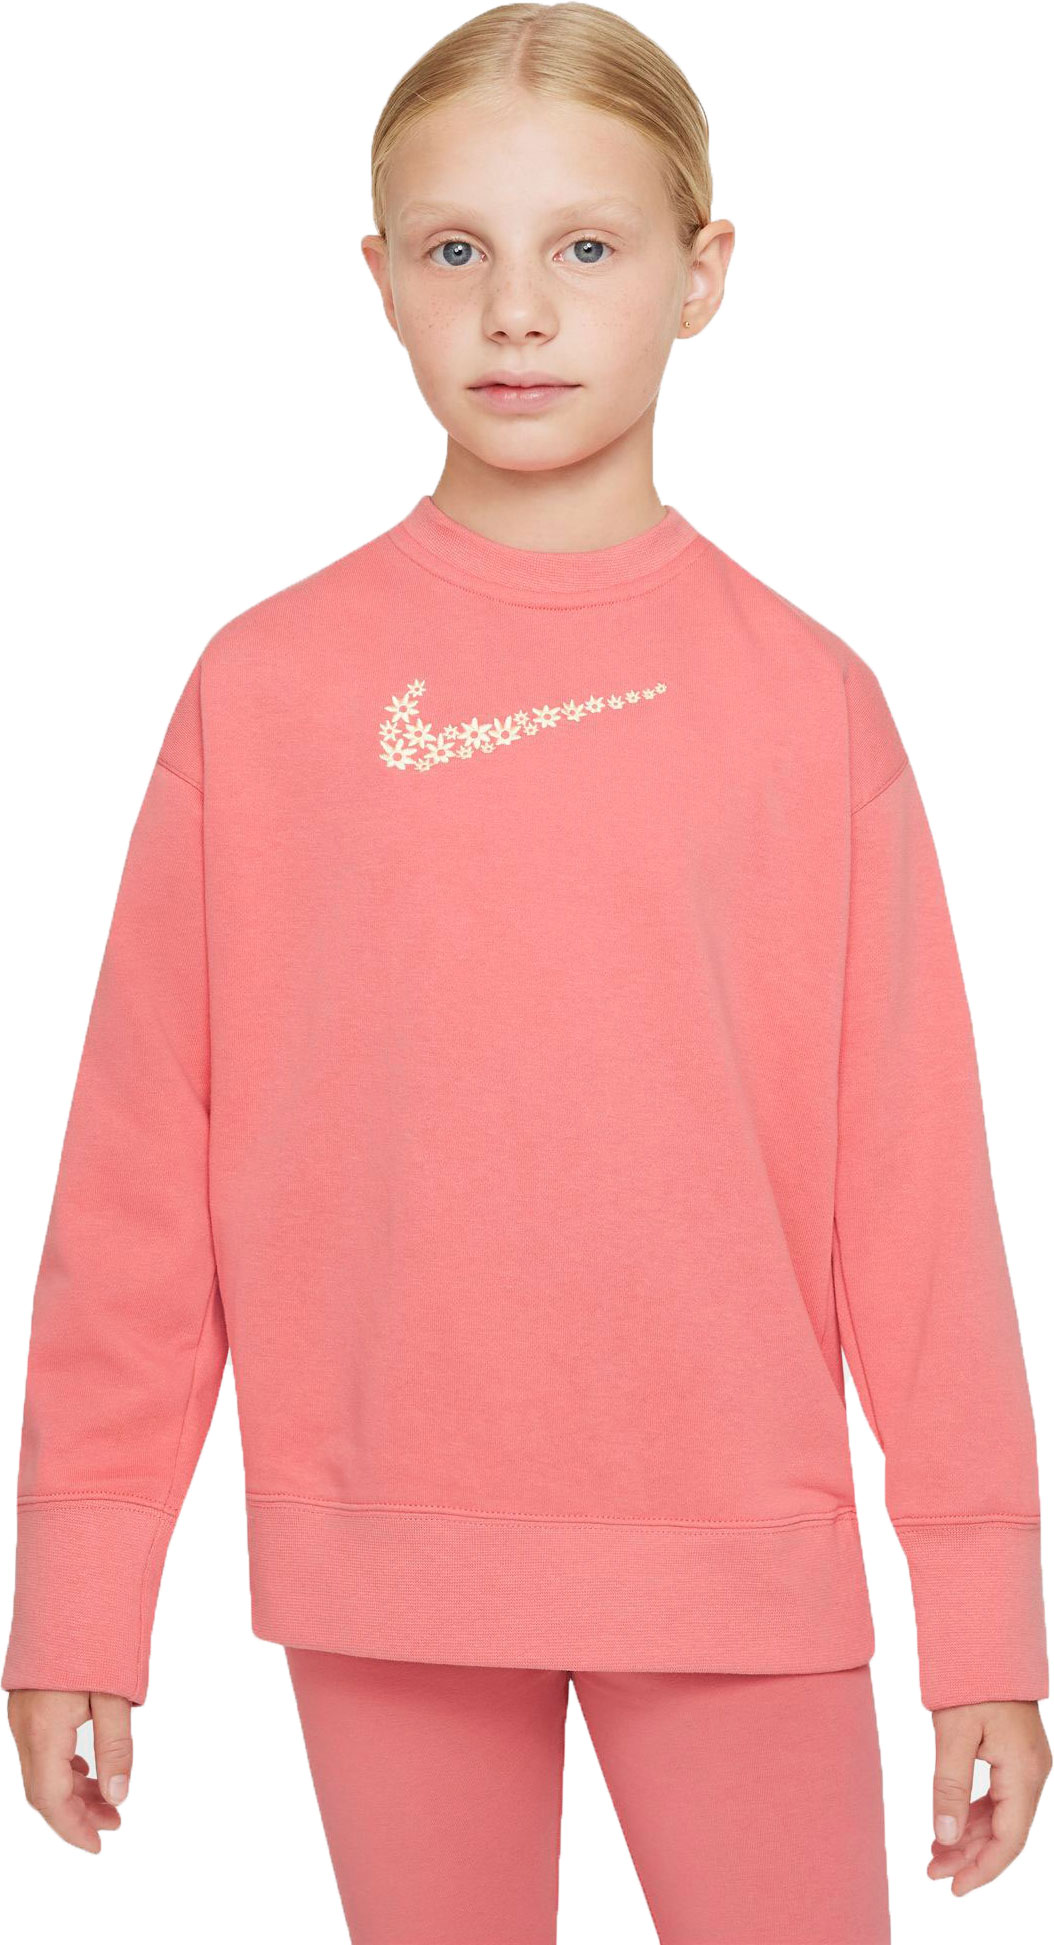 Girls’ sweatshirt